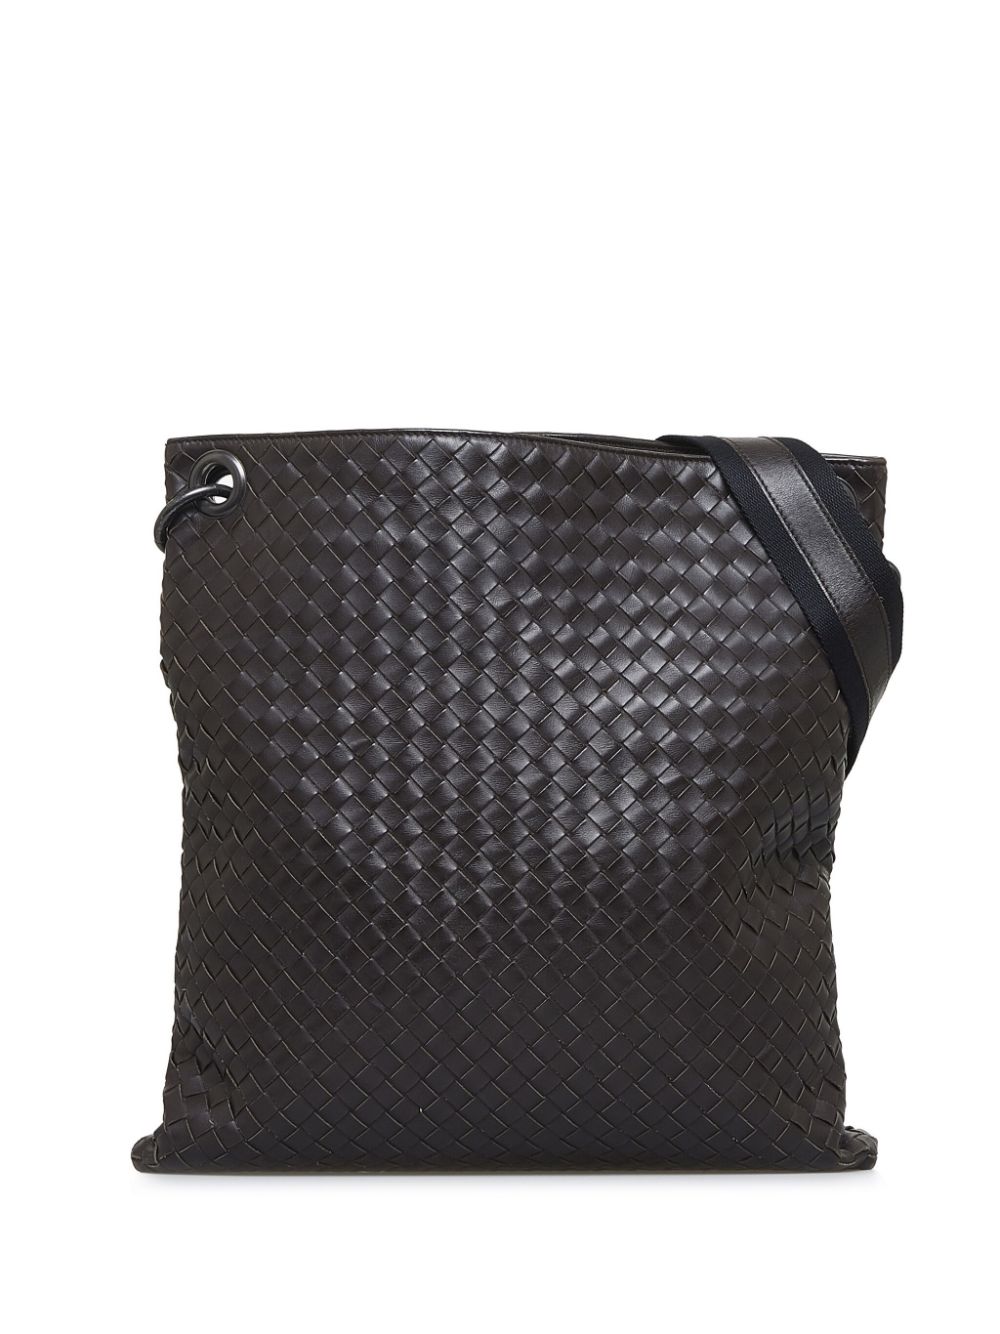 Bottega Veneta Pre-Owned Intrecciato Leather Crossbody Bag - Farfetch